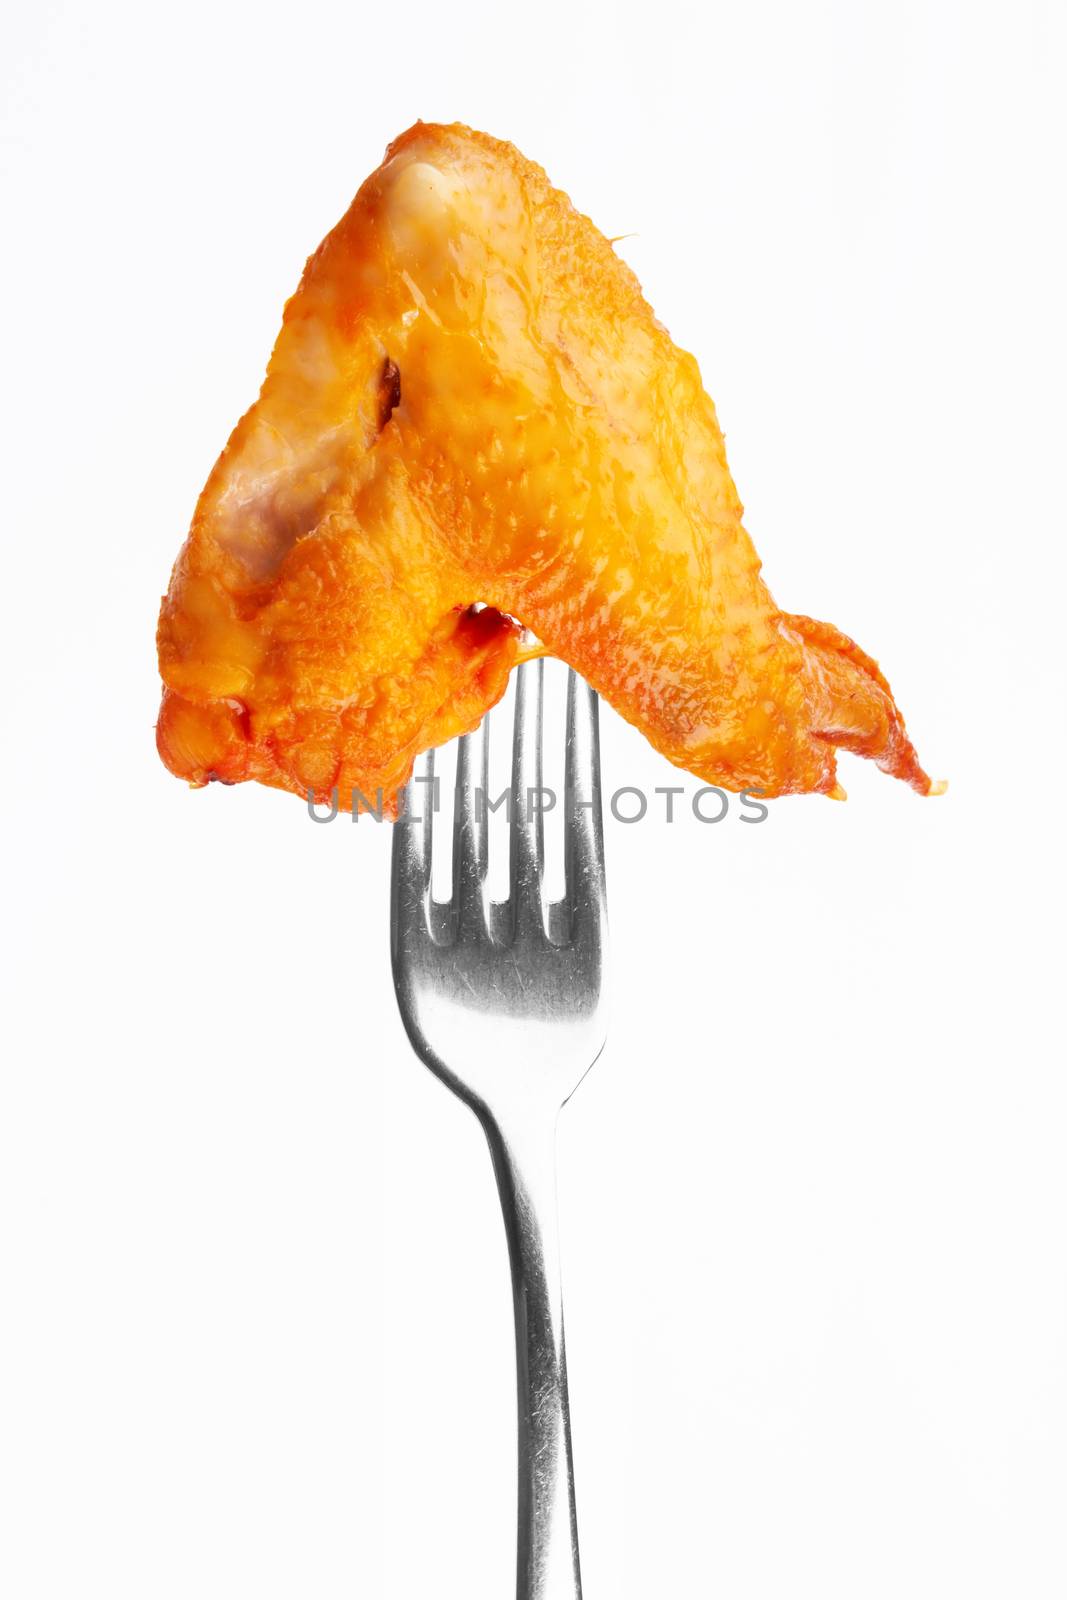 chicken by pioneer111